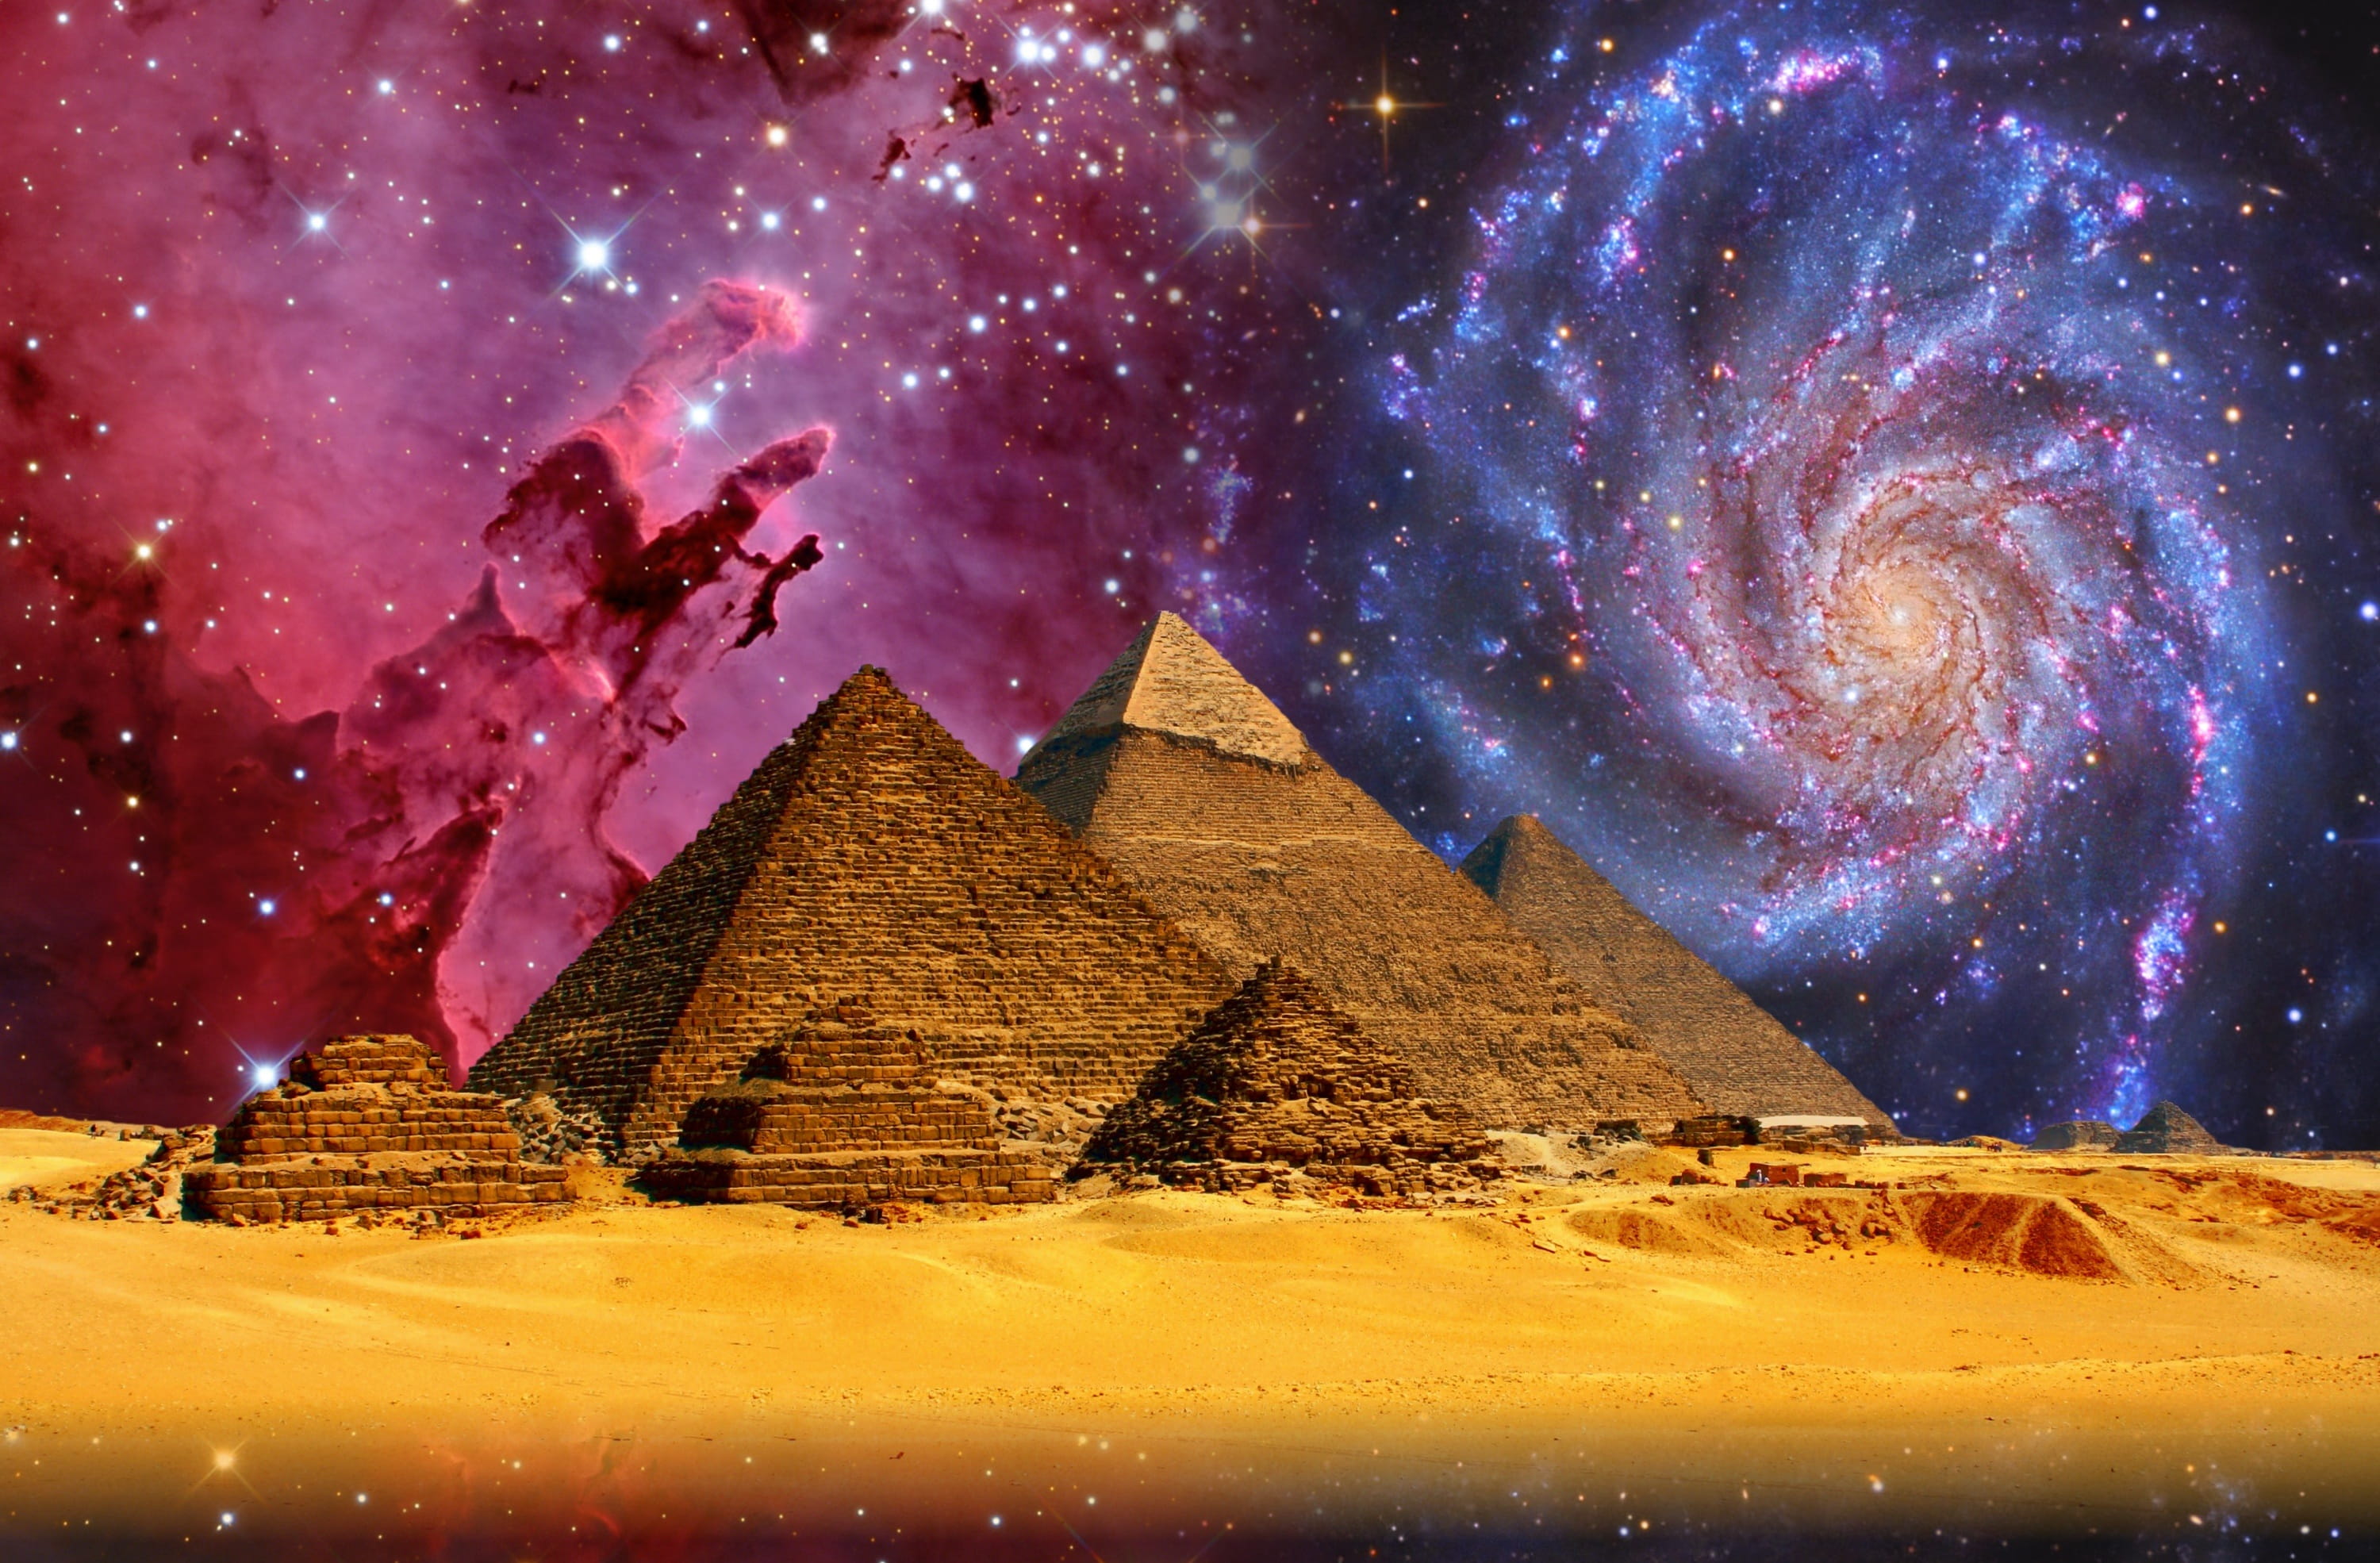 The Pyramid of Giza under a nebula and andromeda galaxy, gizeh